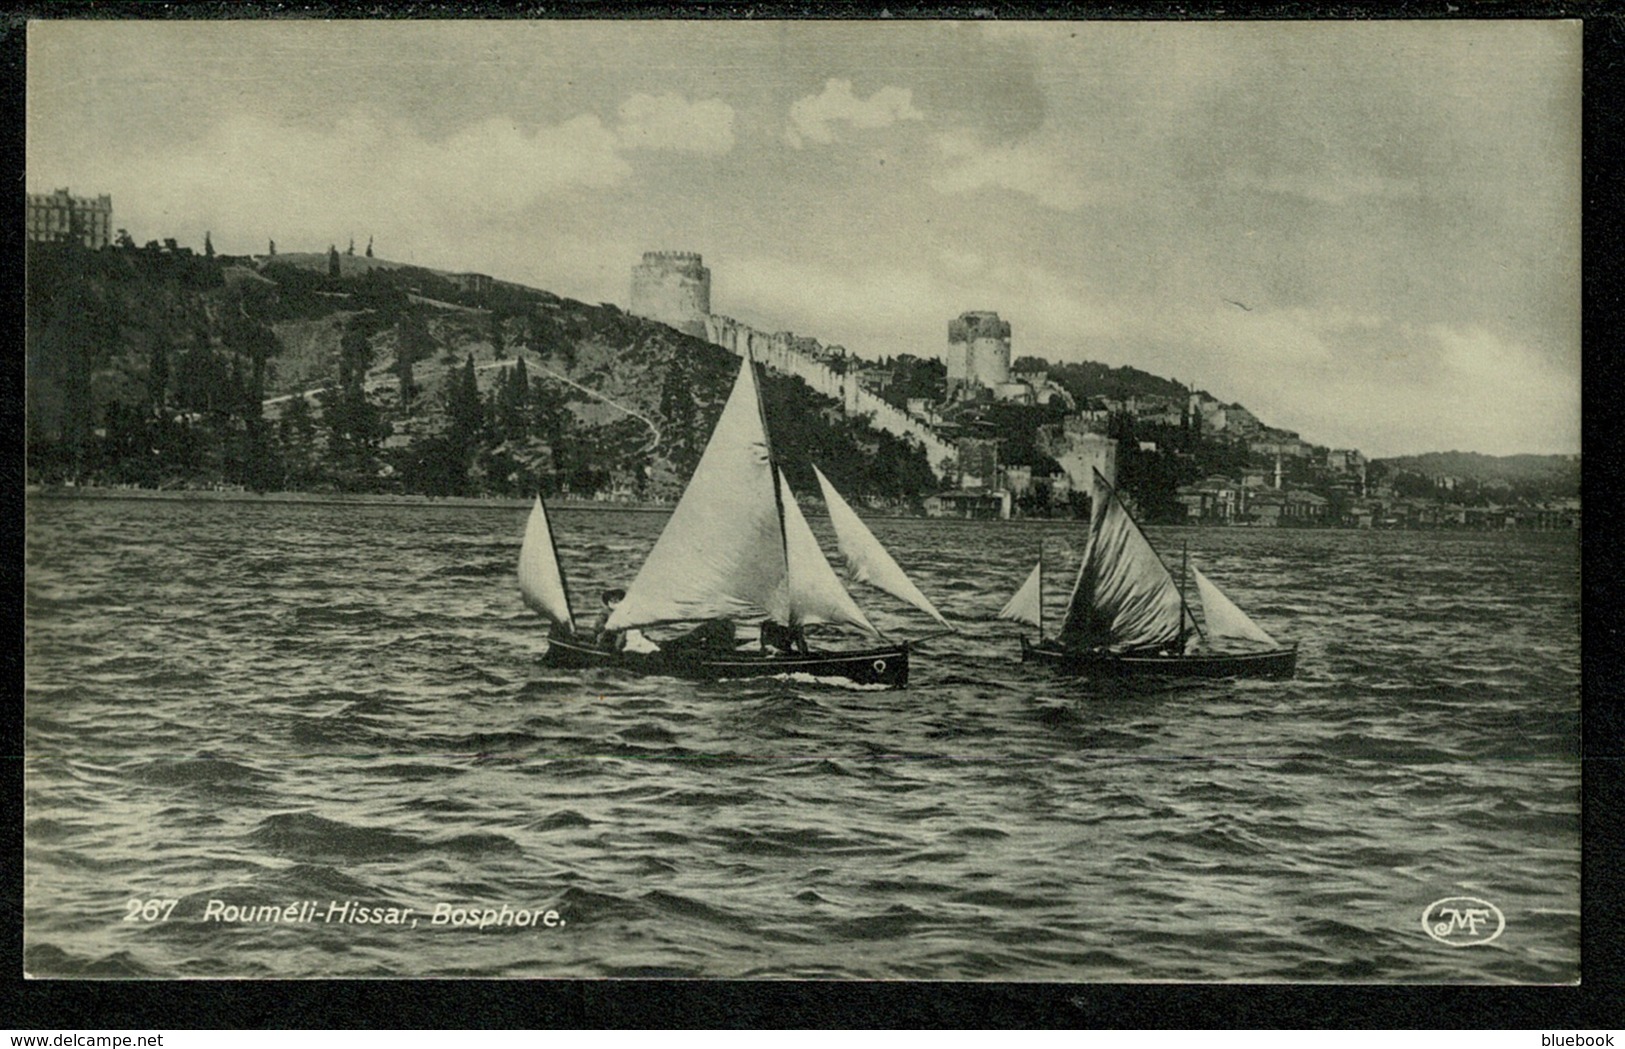 Ref 1259 - Early Real Photo Postcard - Roumeli-Hissar Bosphore - Constantinople Turkey - Turkey